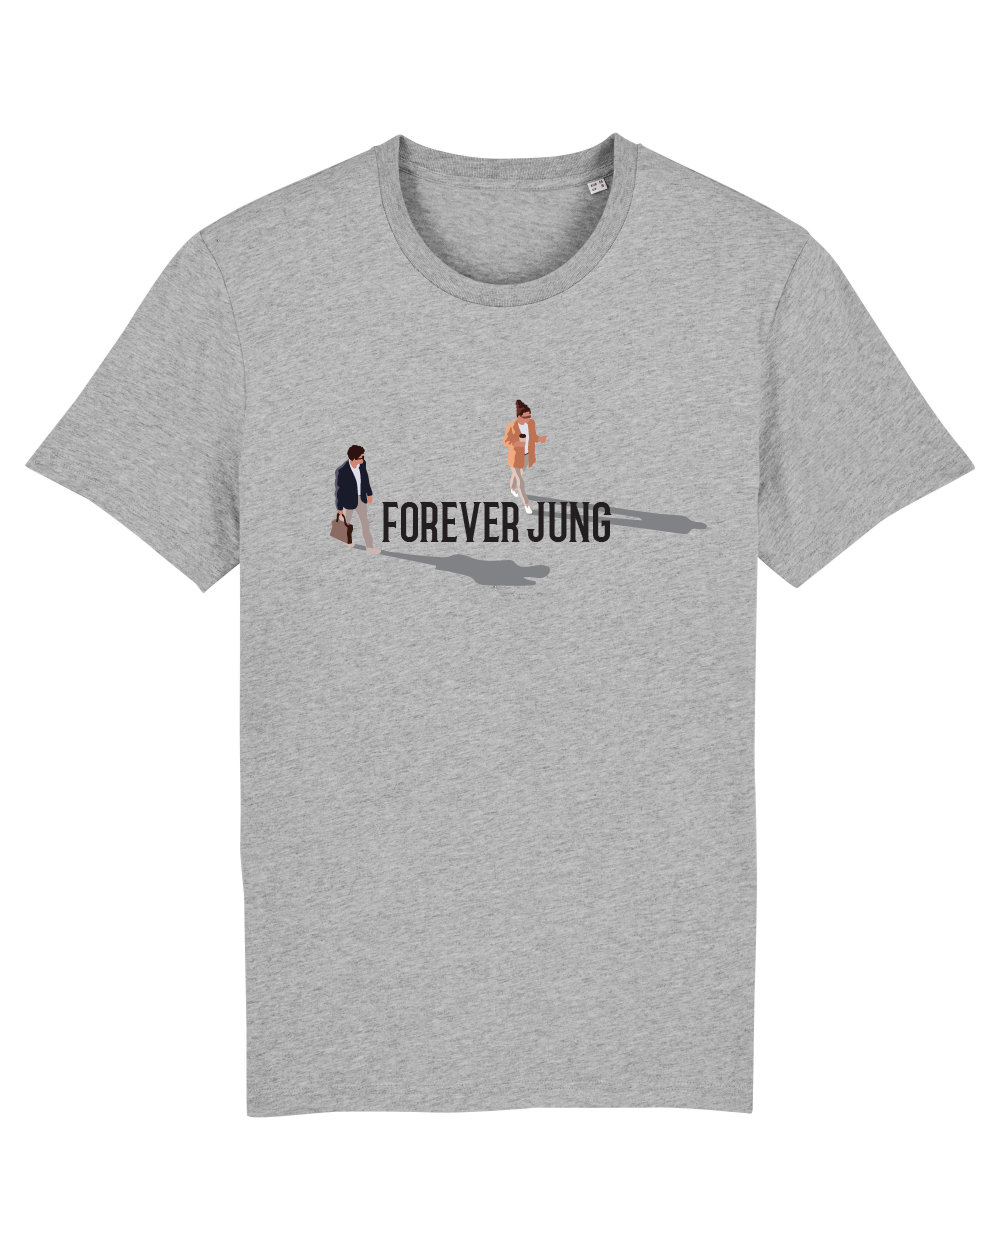 Forever Jung - Unisex Tshirt